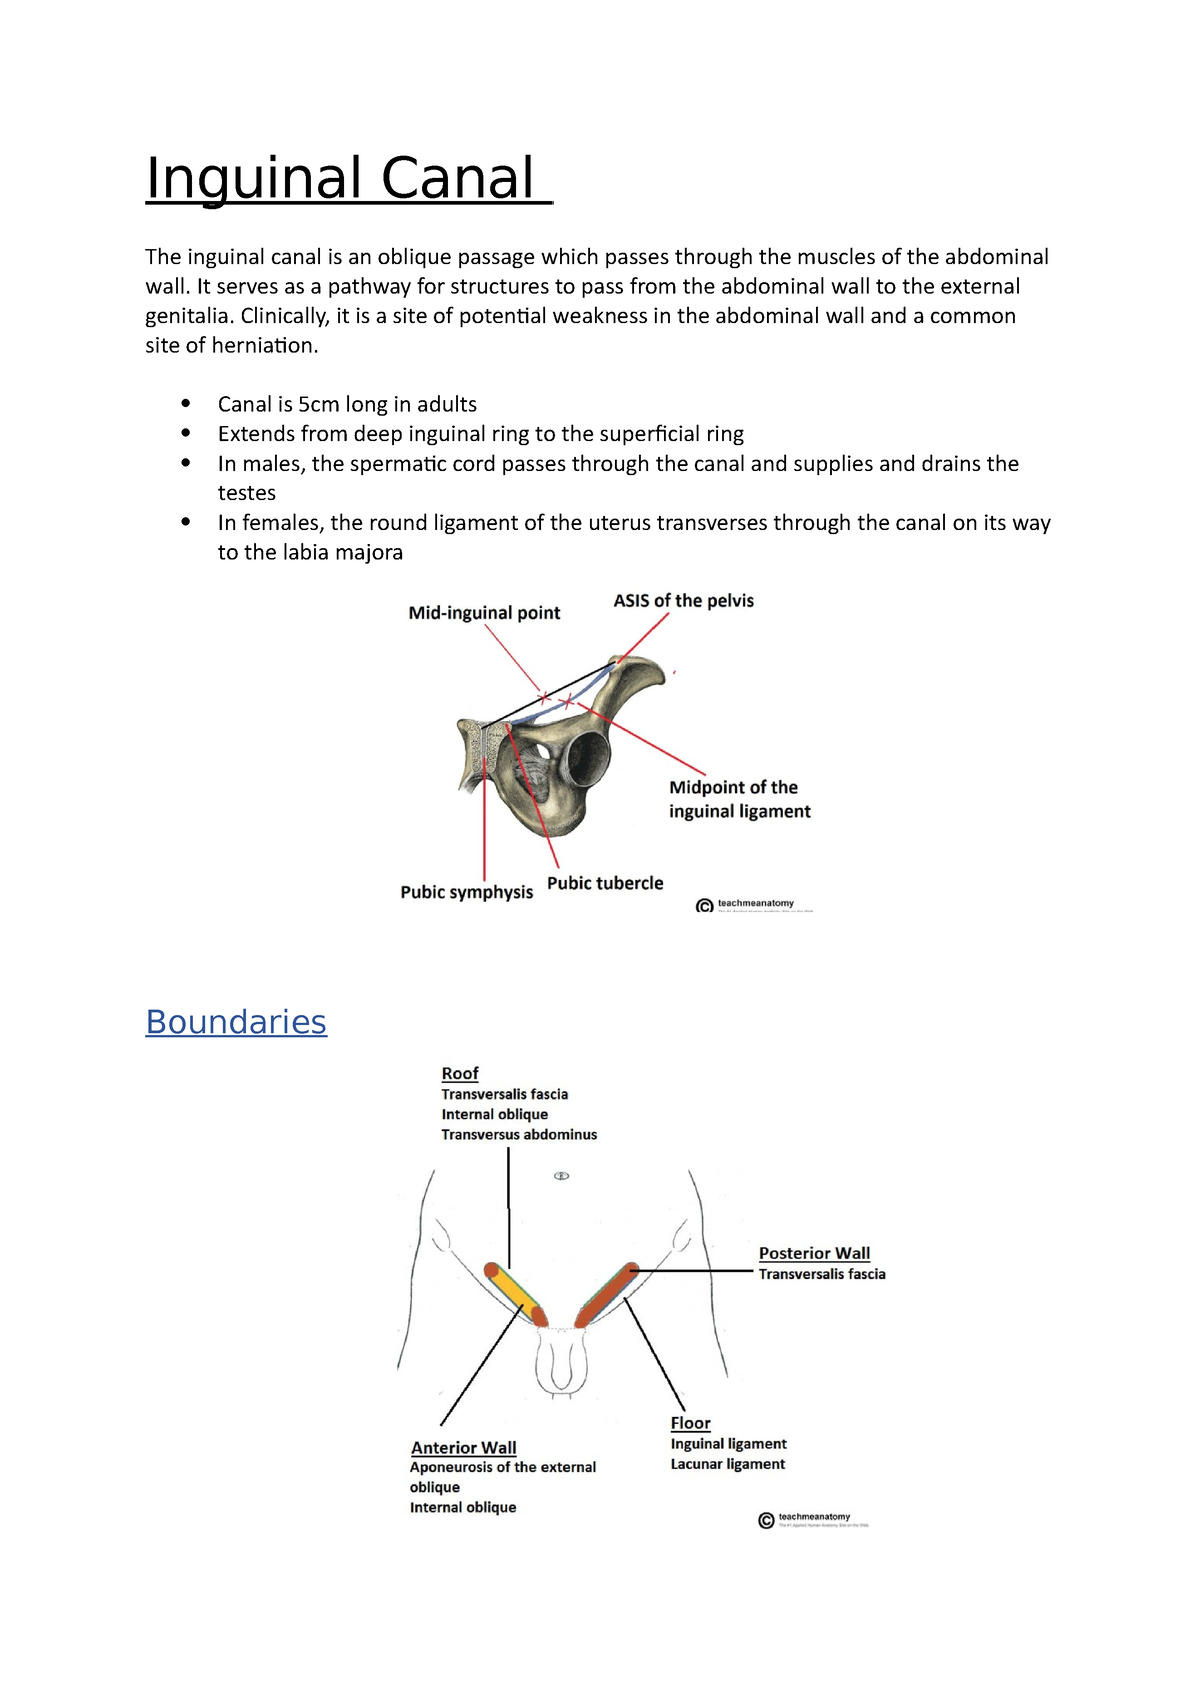 Deep Inguinal Ring | Complete Anatomy